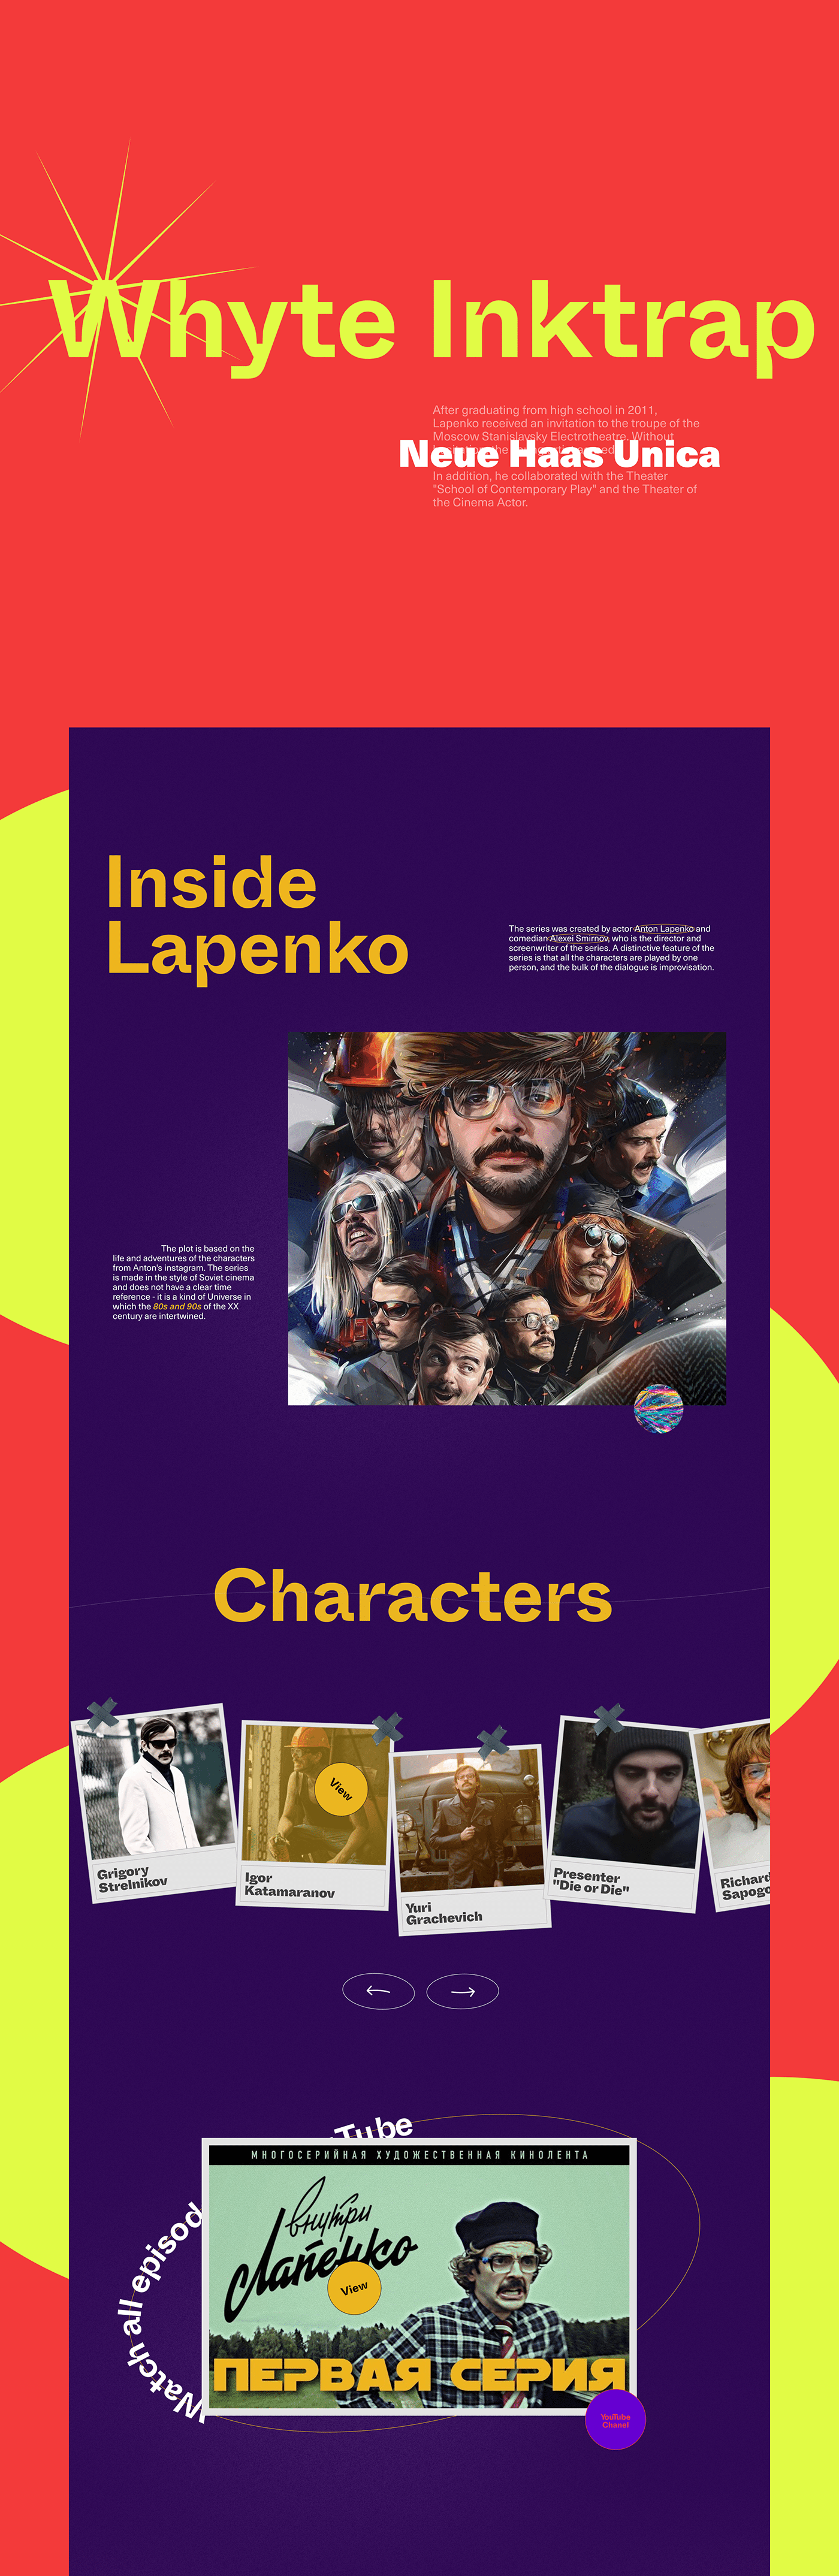 actor anton lapenko biography bright Celebrity longread person personality theater  portfolio